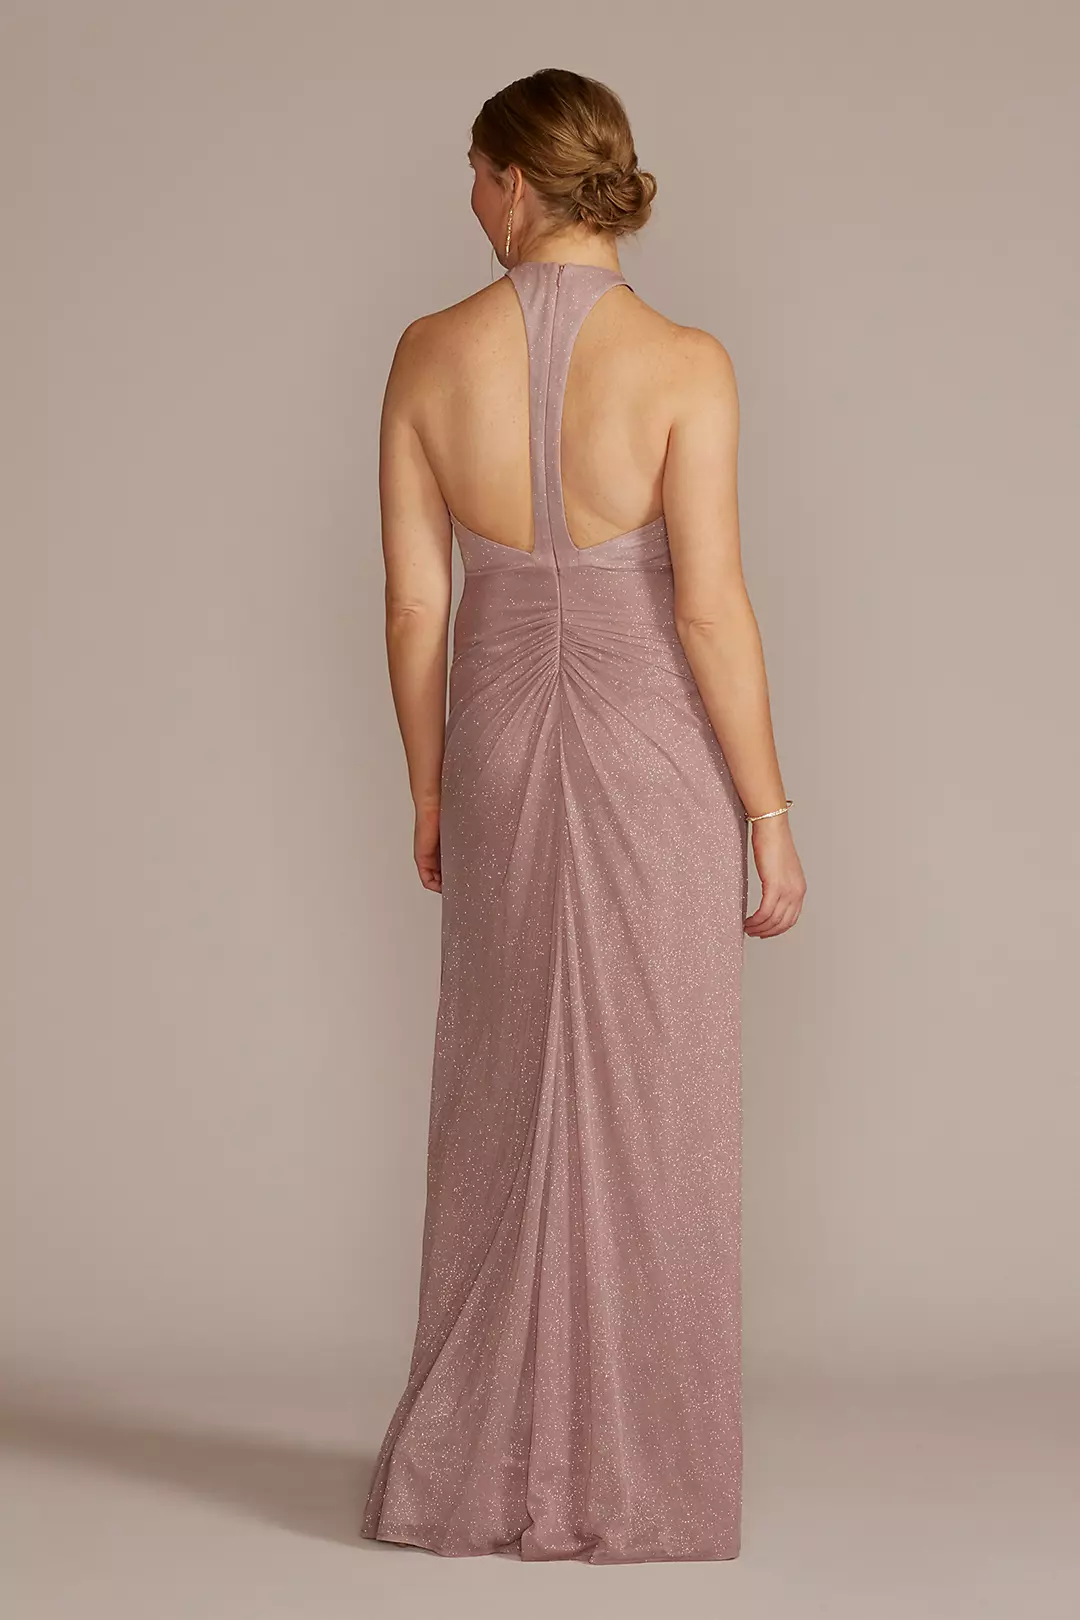 Glitter Knit Wrap Tank Dress with Skirt Slit Image 2